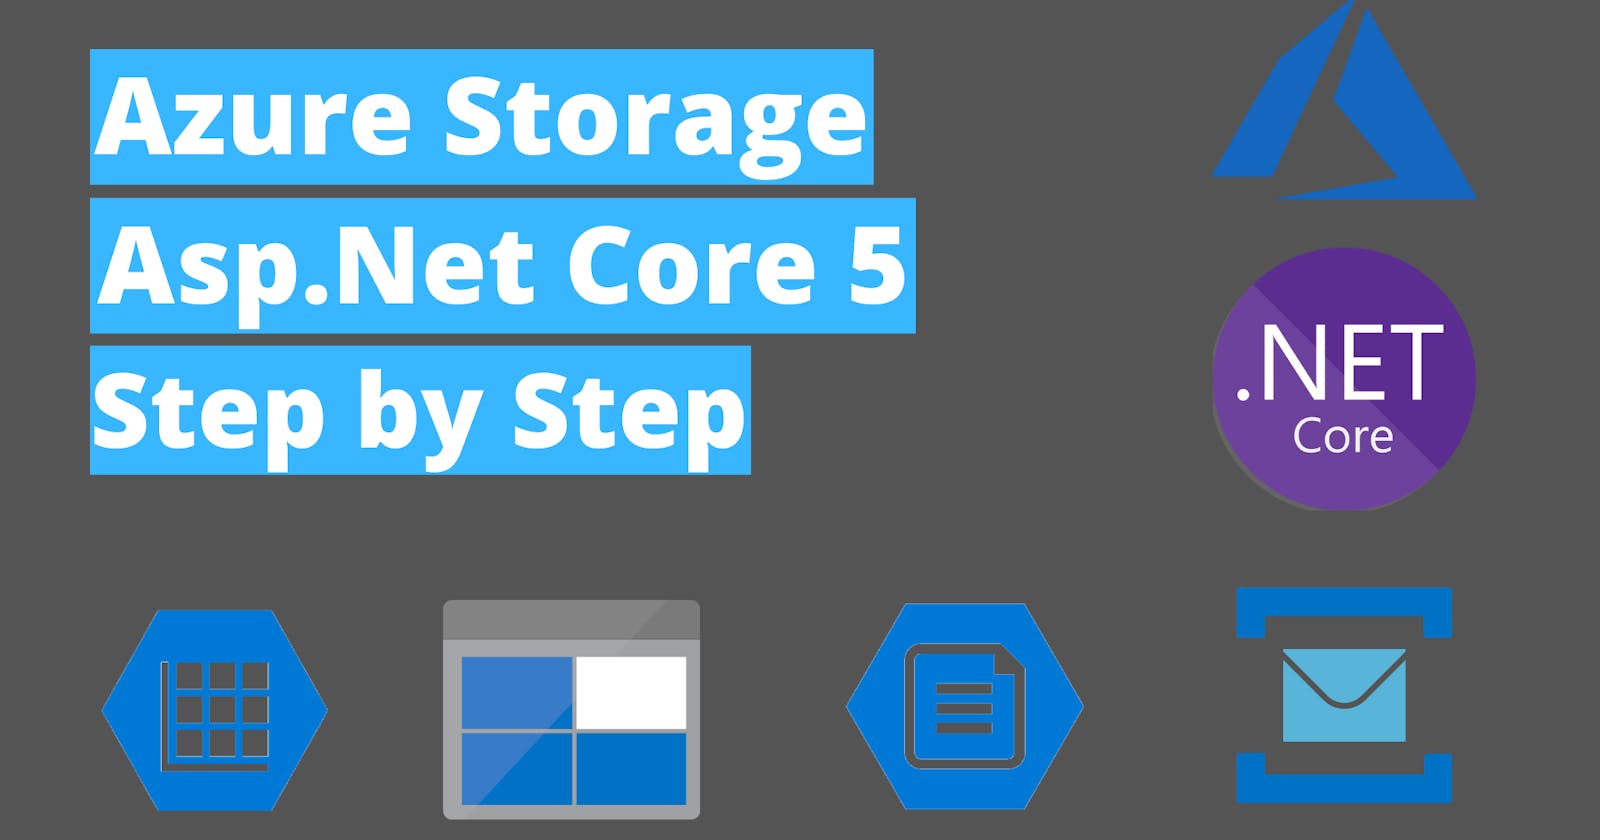 Intro to Azure Storage with AspNetCore 5